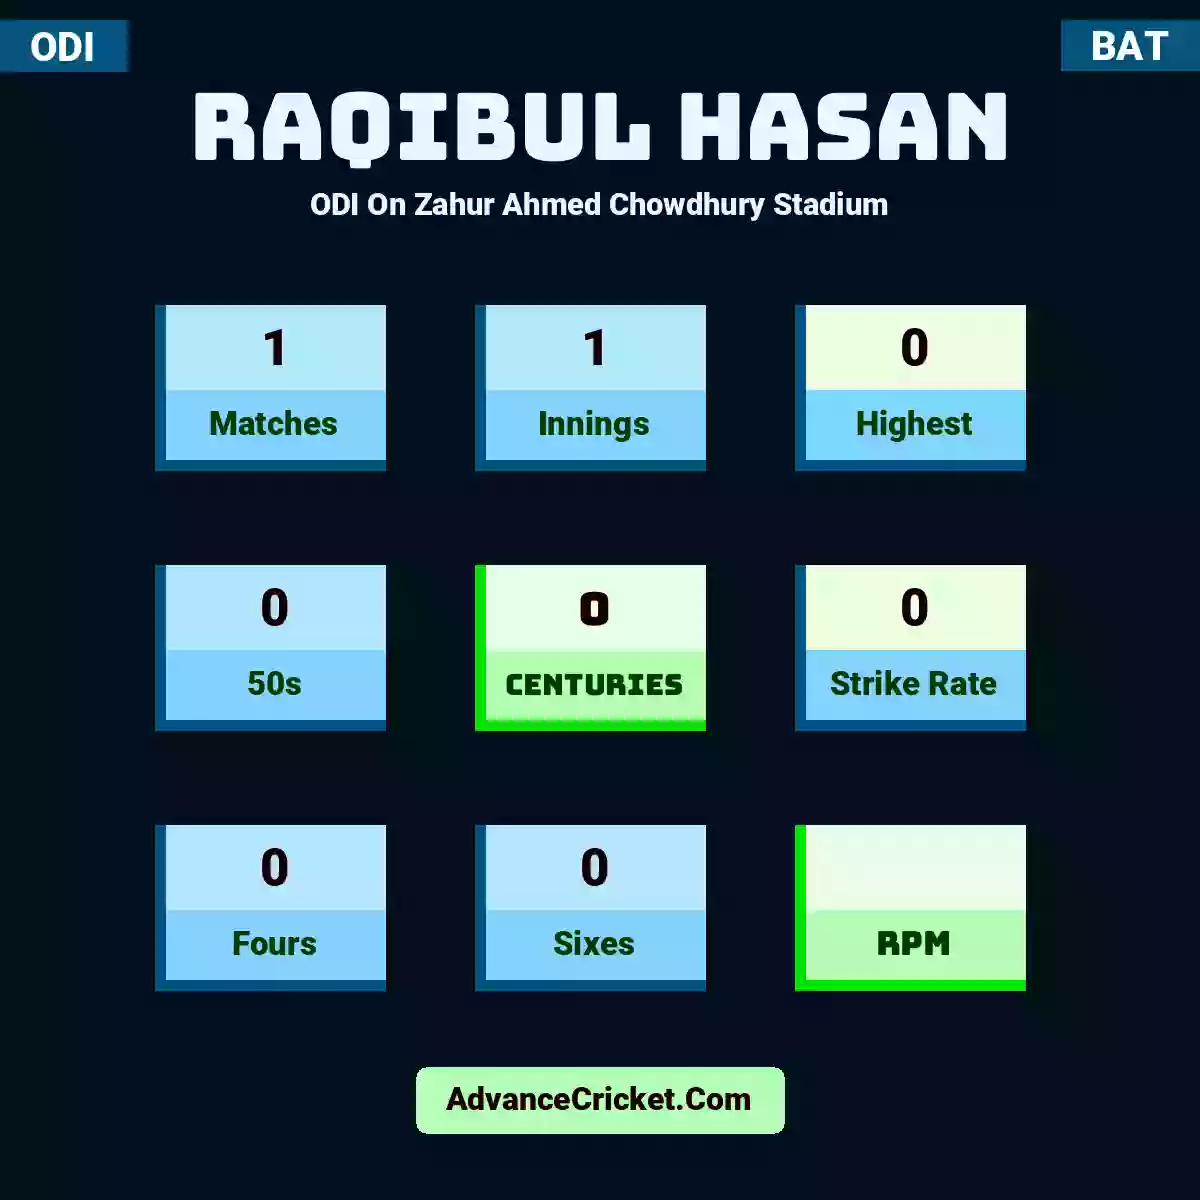 Raqibul Hasan ODI  On Zahur Ahmed Chowdhury Stadium, Raqibul Hasan played 1 matches, scored 0 runs as highest, 0 half-centuries, and 0 centuries, with a strike rate of 0. R.Hasan hit 0 fours and 0 sixes.